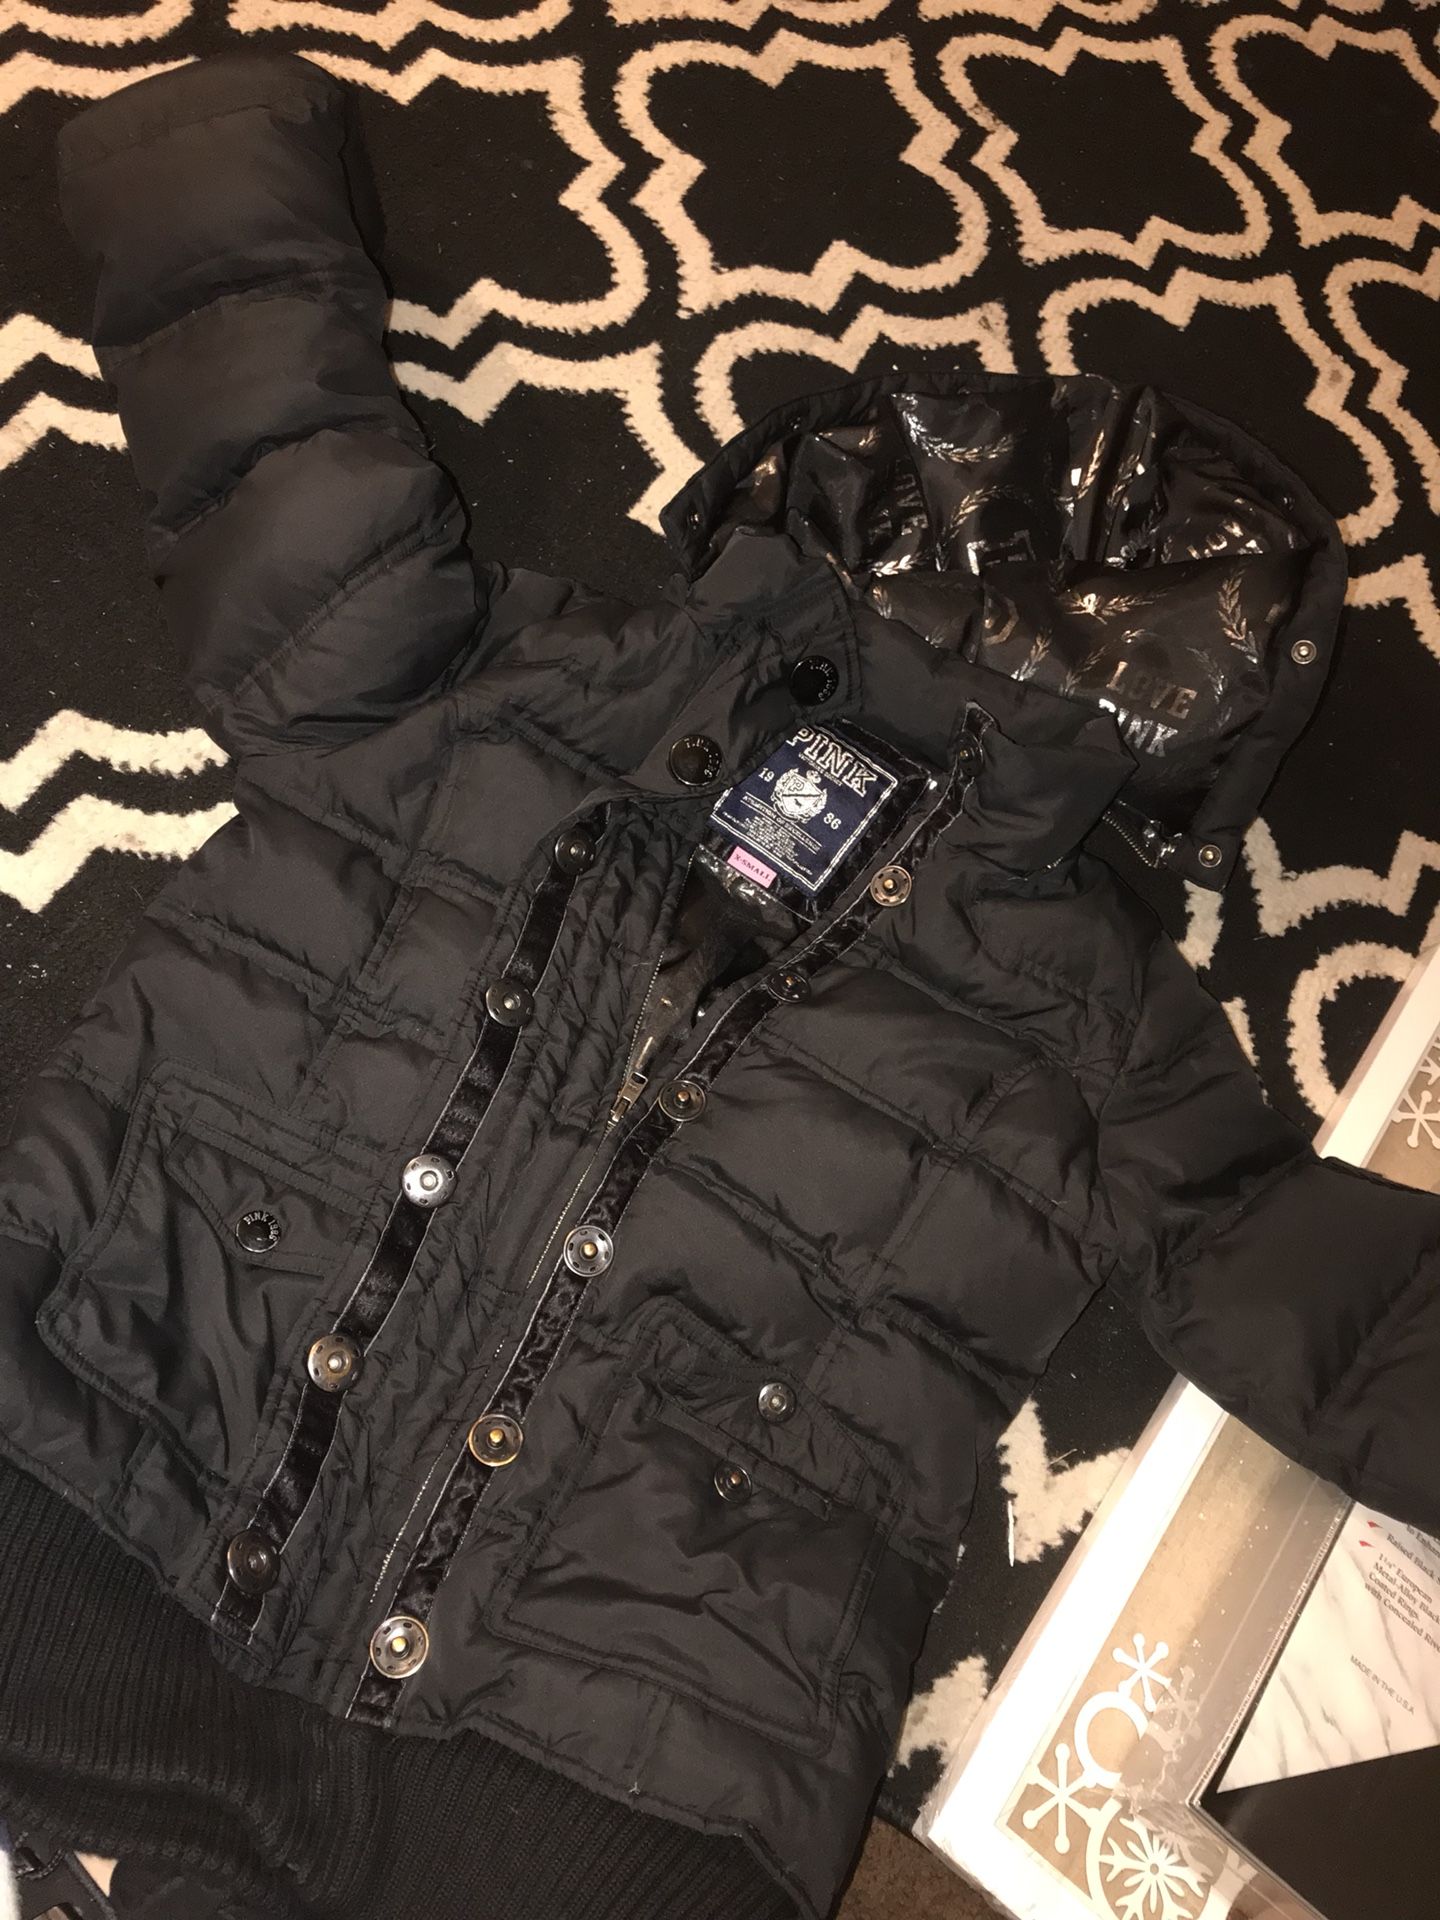 Black Friday winter jacket sale